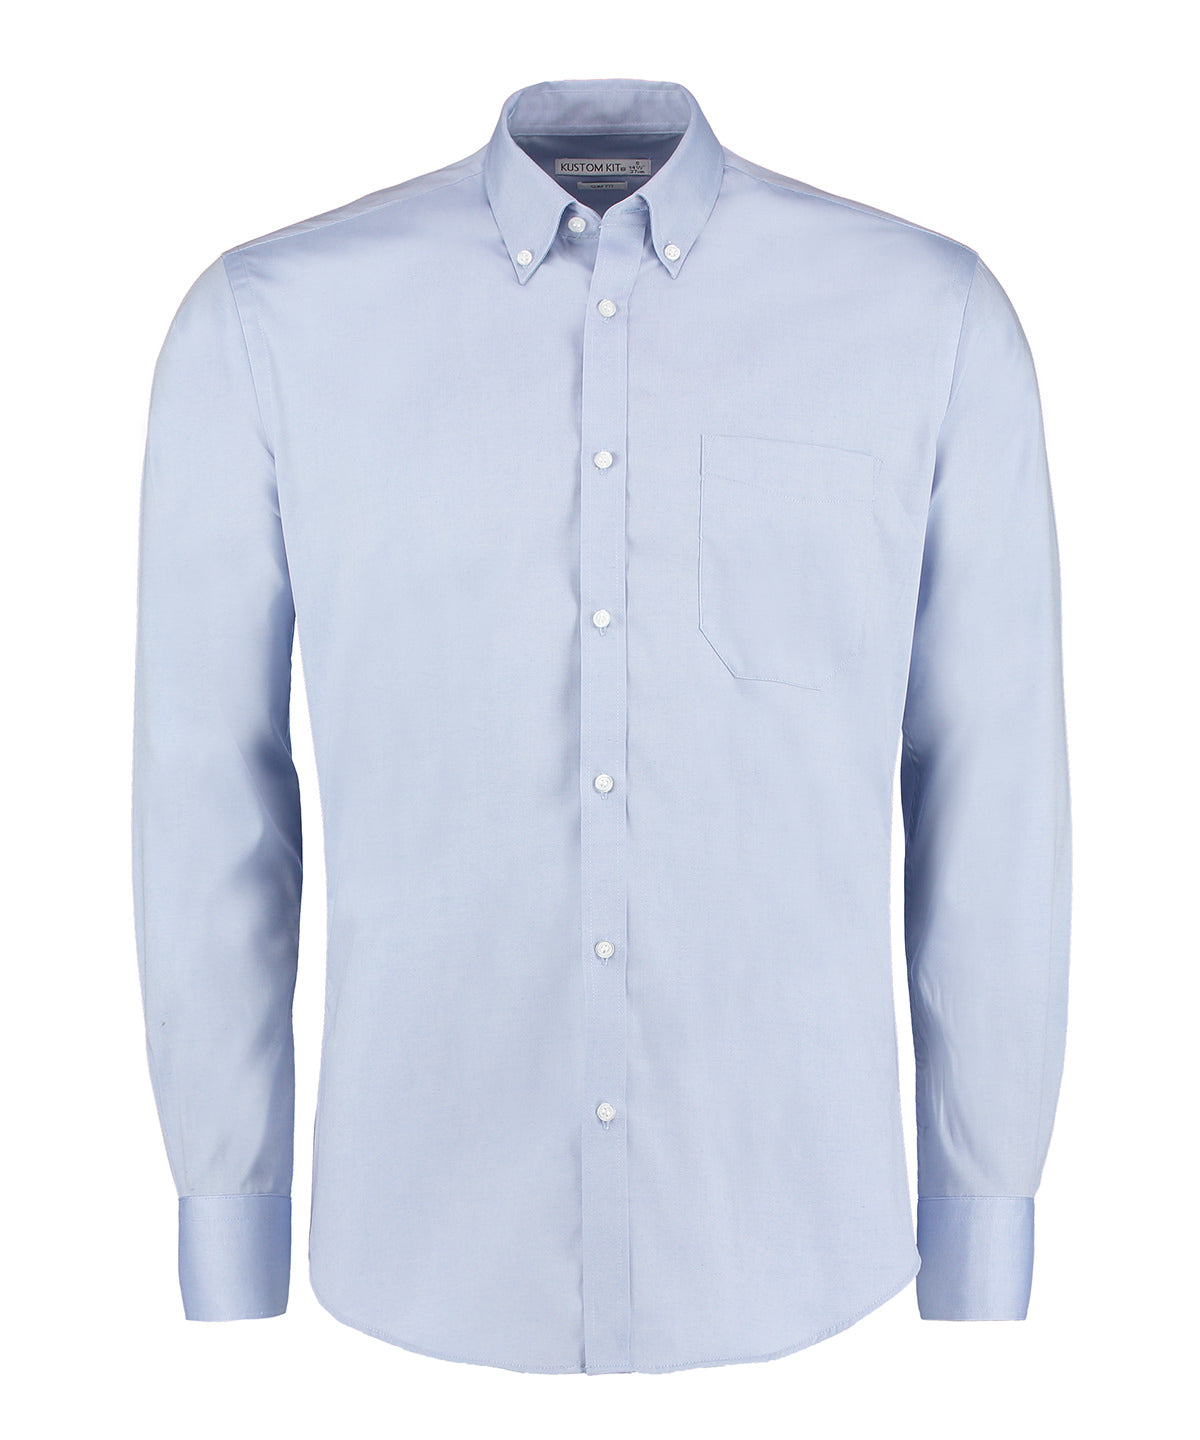 Kustom Kit Slim fit premium Oxford shirt long-sleeved